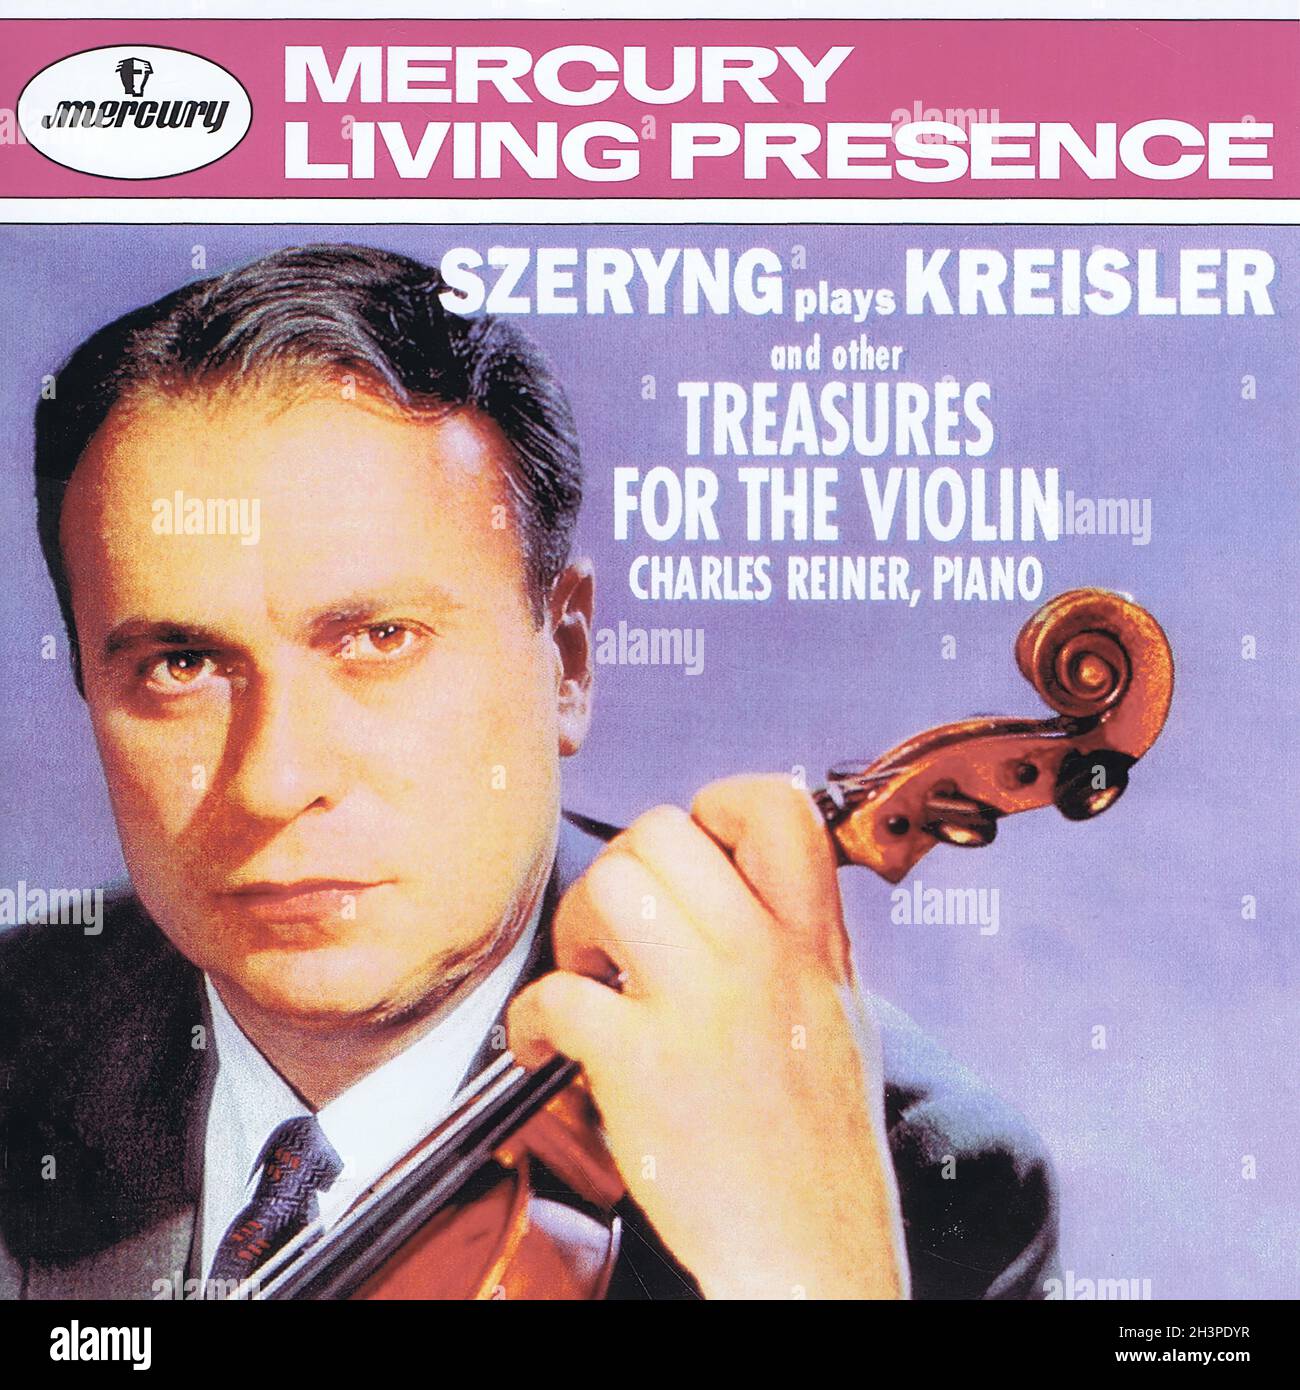 Kreisler Treasures for the Violin - Szeryng Mercury Living Presence Collector's Edition V.1 - Classical Music Vintage Vinyl Record Stockfoto